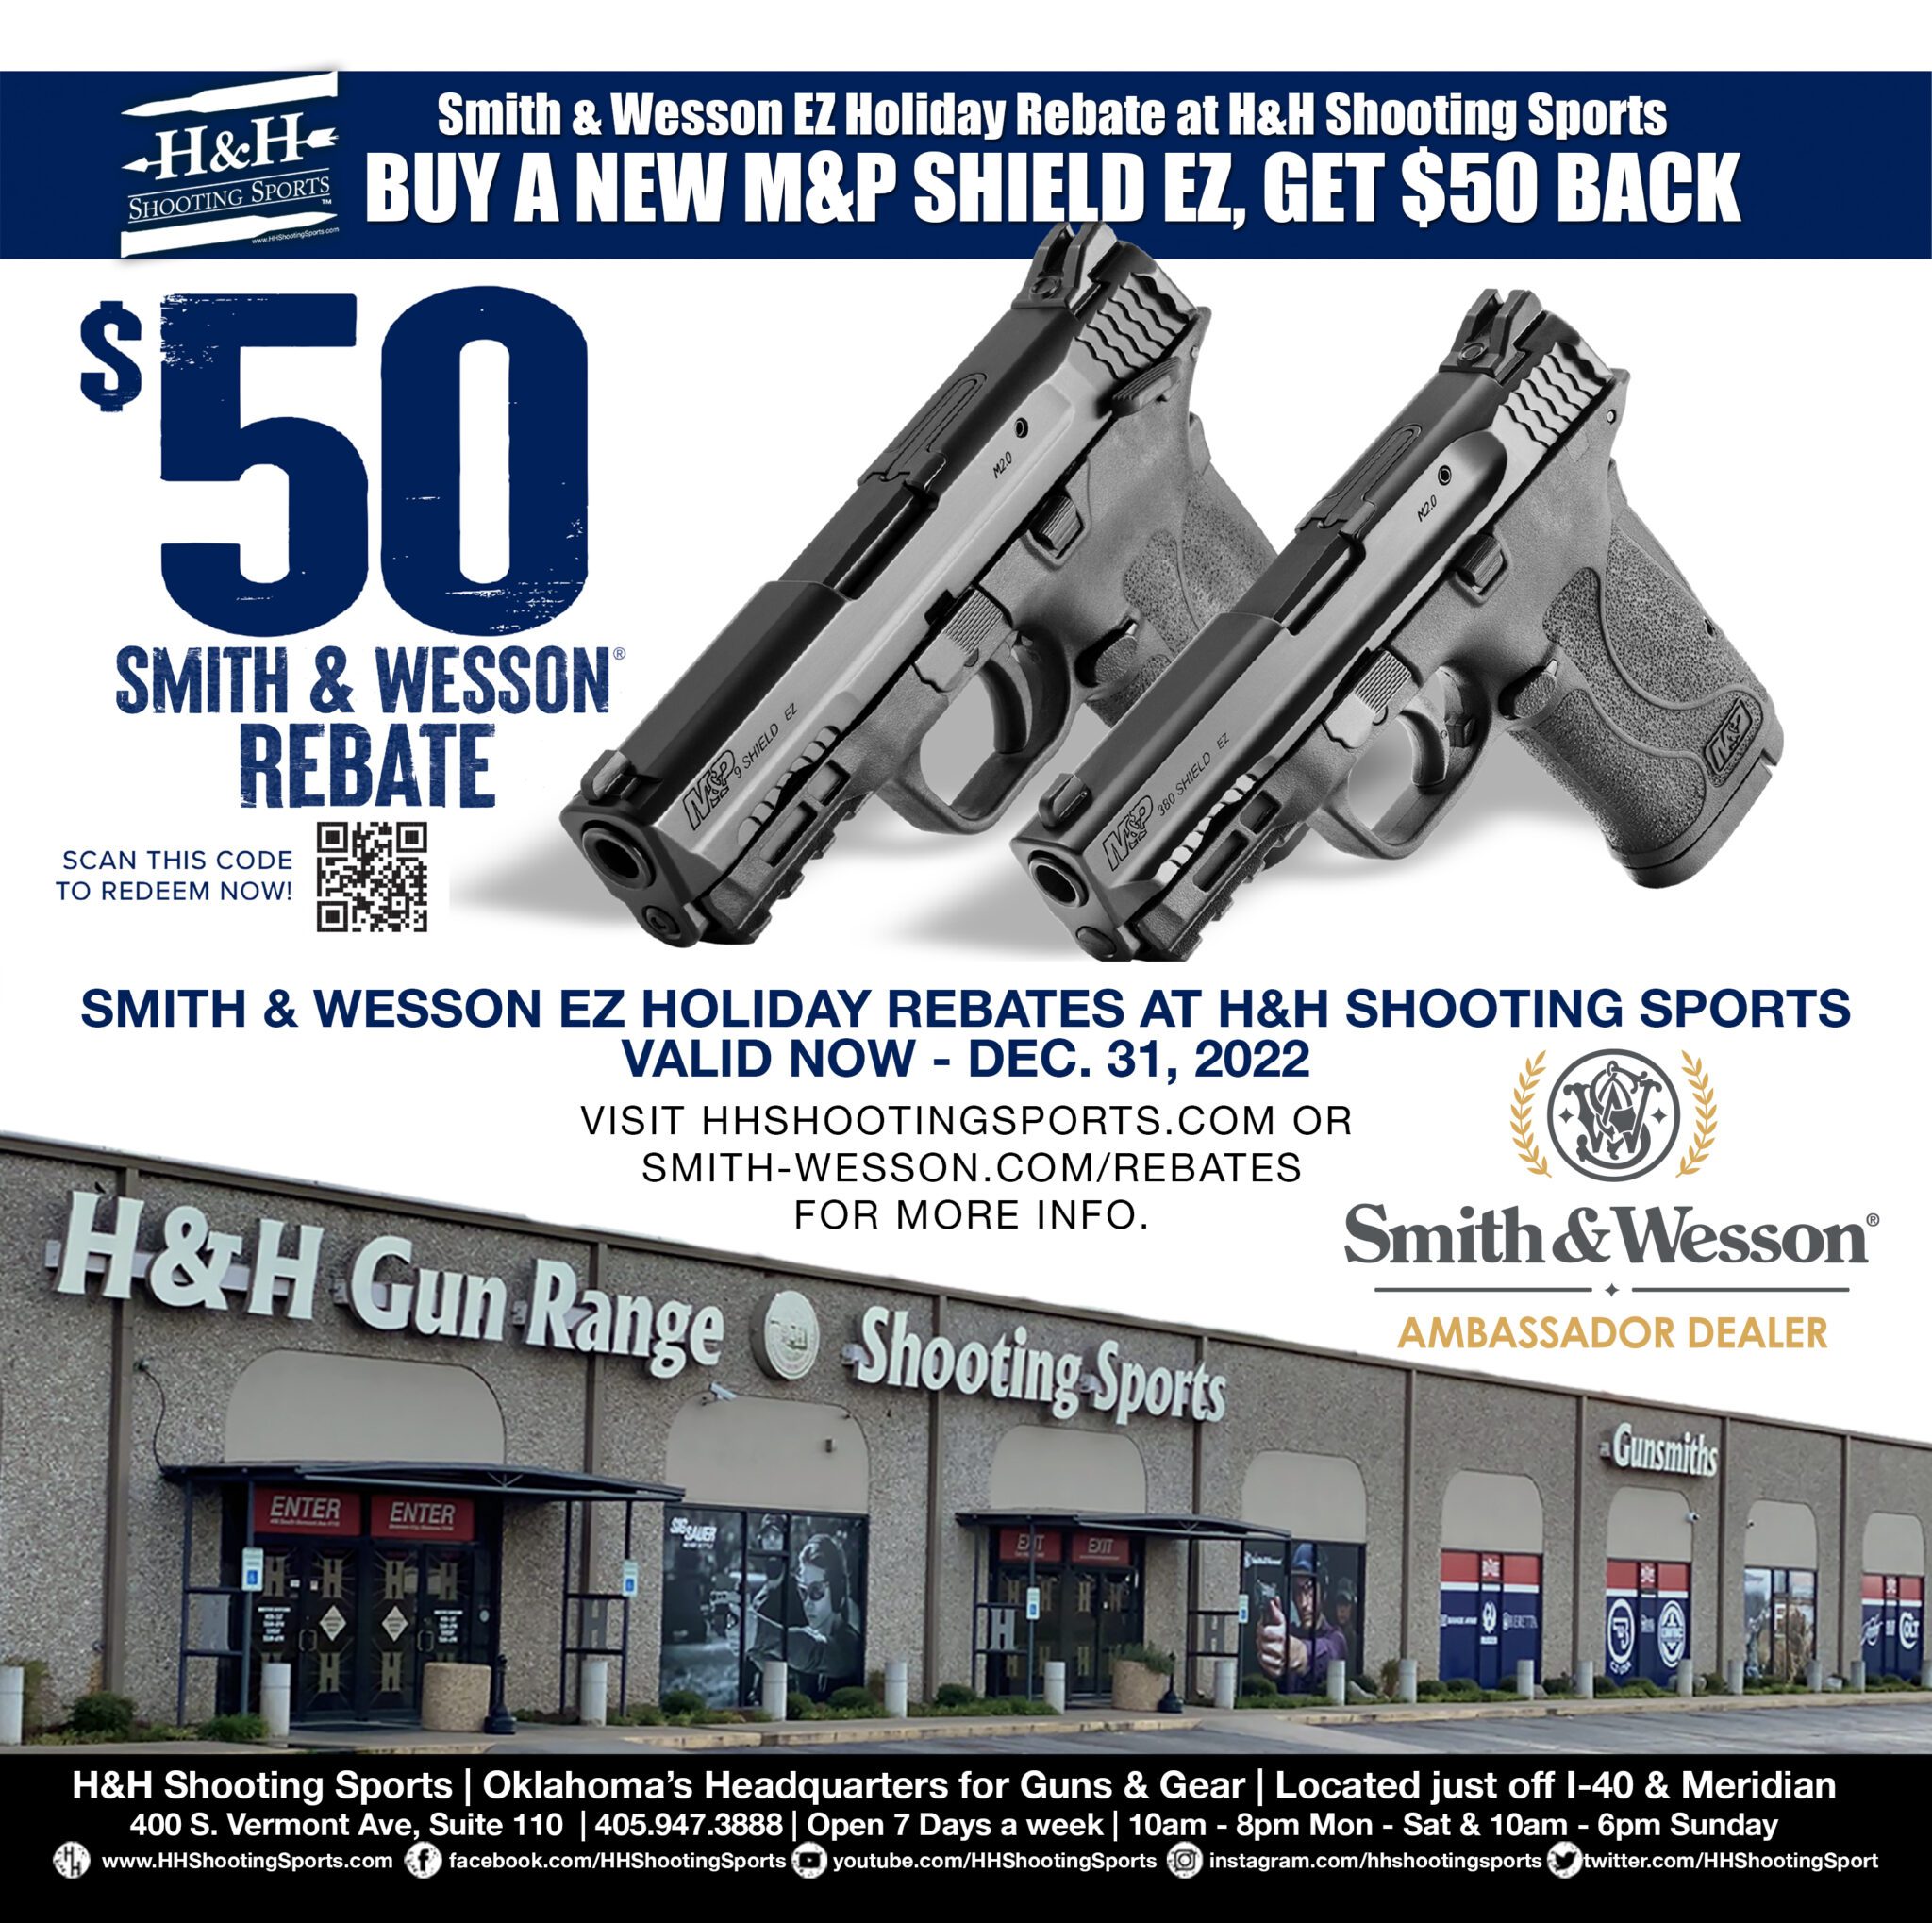 smith-wesson-shield-ez-holiday-rebate-h-h-shooting-sports-oklahoma-city